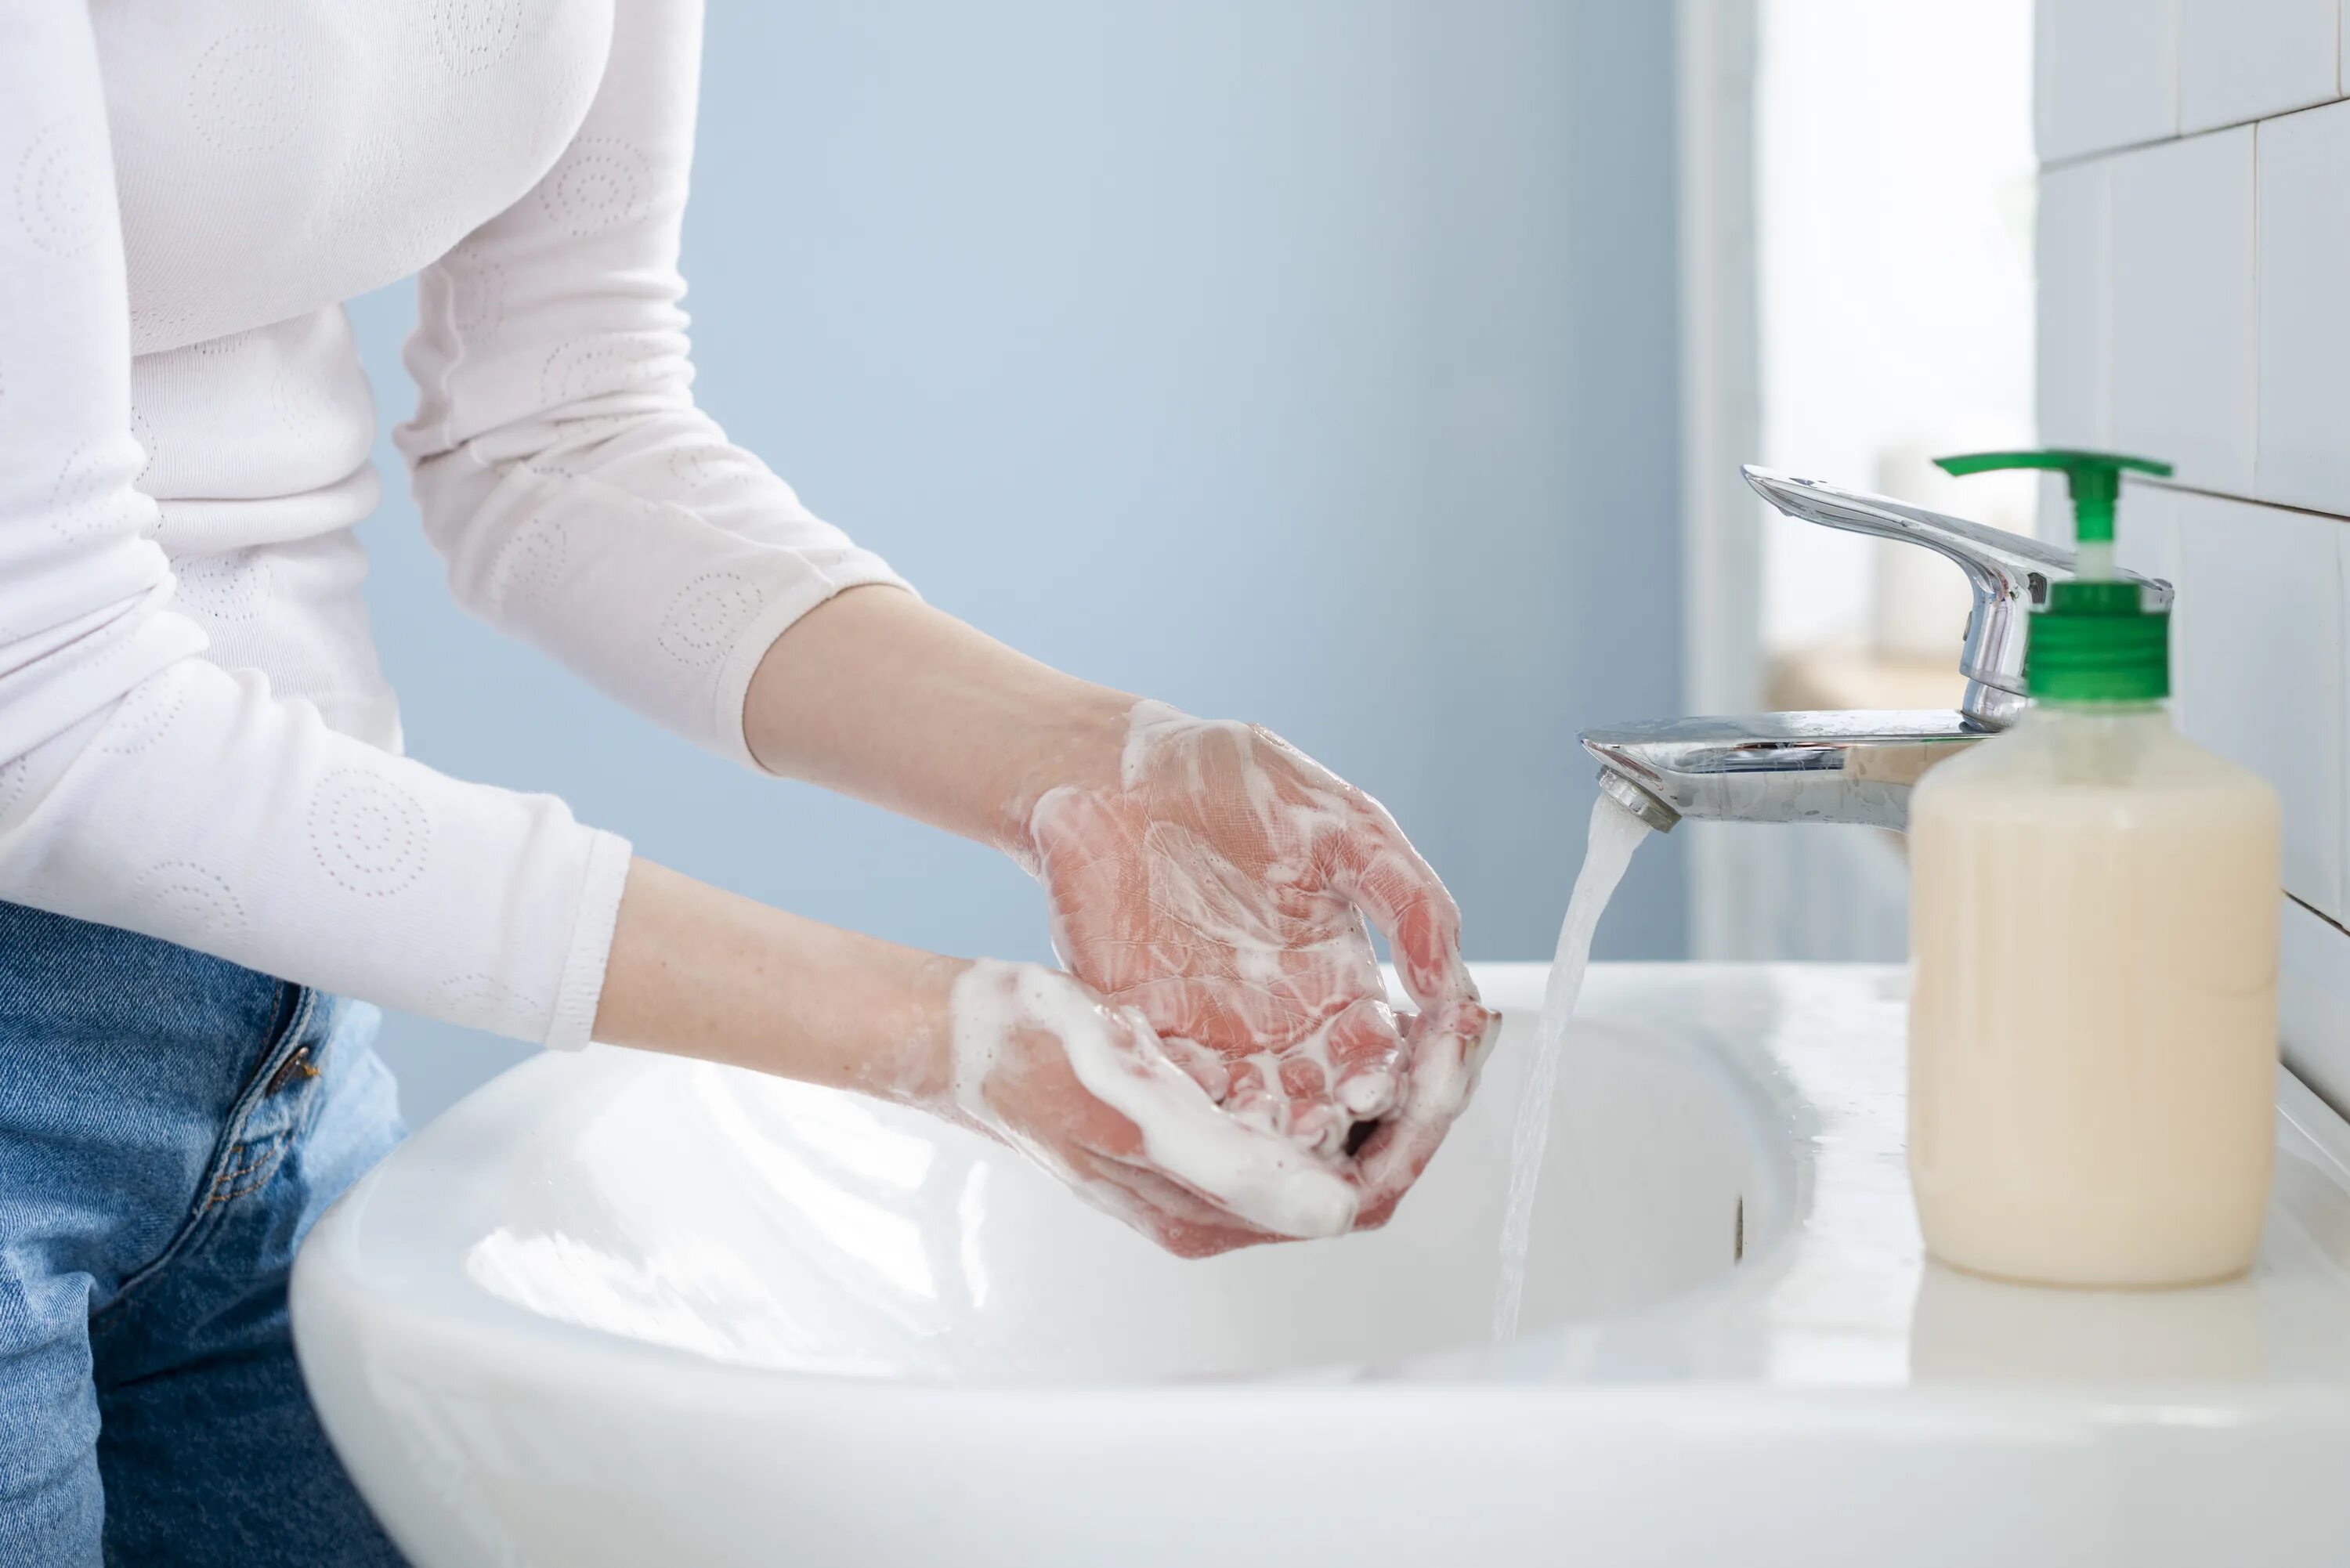 We wash hands. Мытье рук. Мытье рук с мылом. Мыло для рук. Мытье рук жидким мылом.